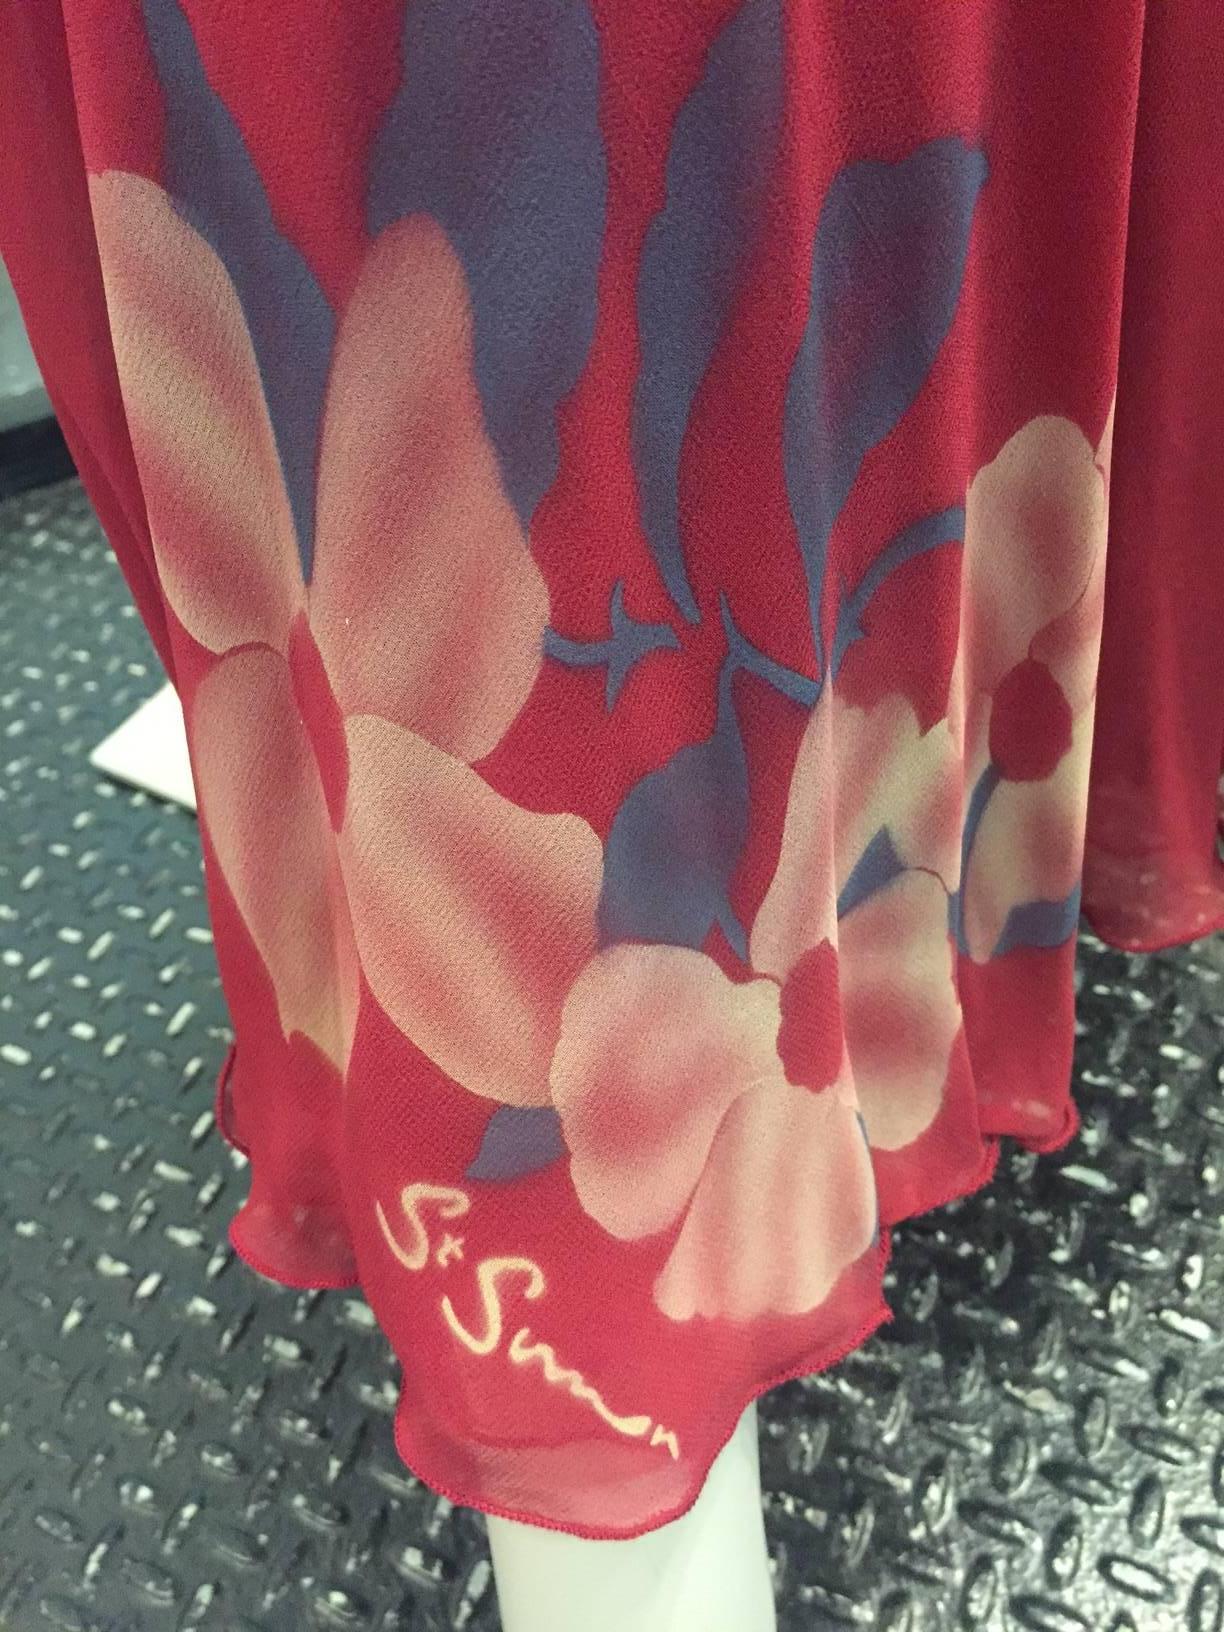 Red 1970s Merlot Rayon Crepe Dancing Dress w/ High Slit Wrap Skirt